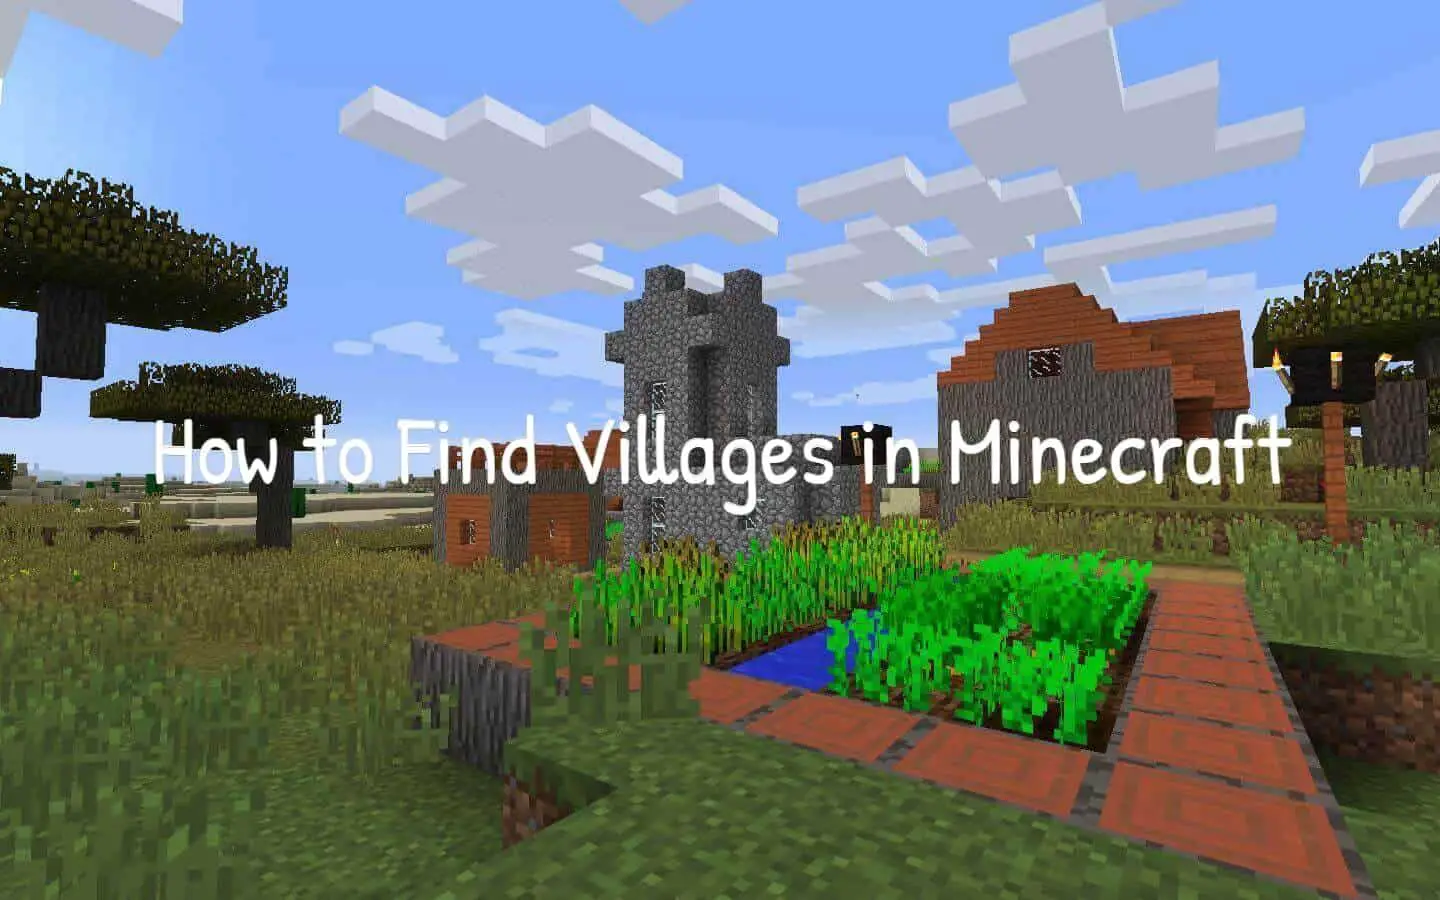 How to Find Villages in Minecraft